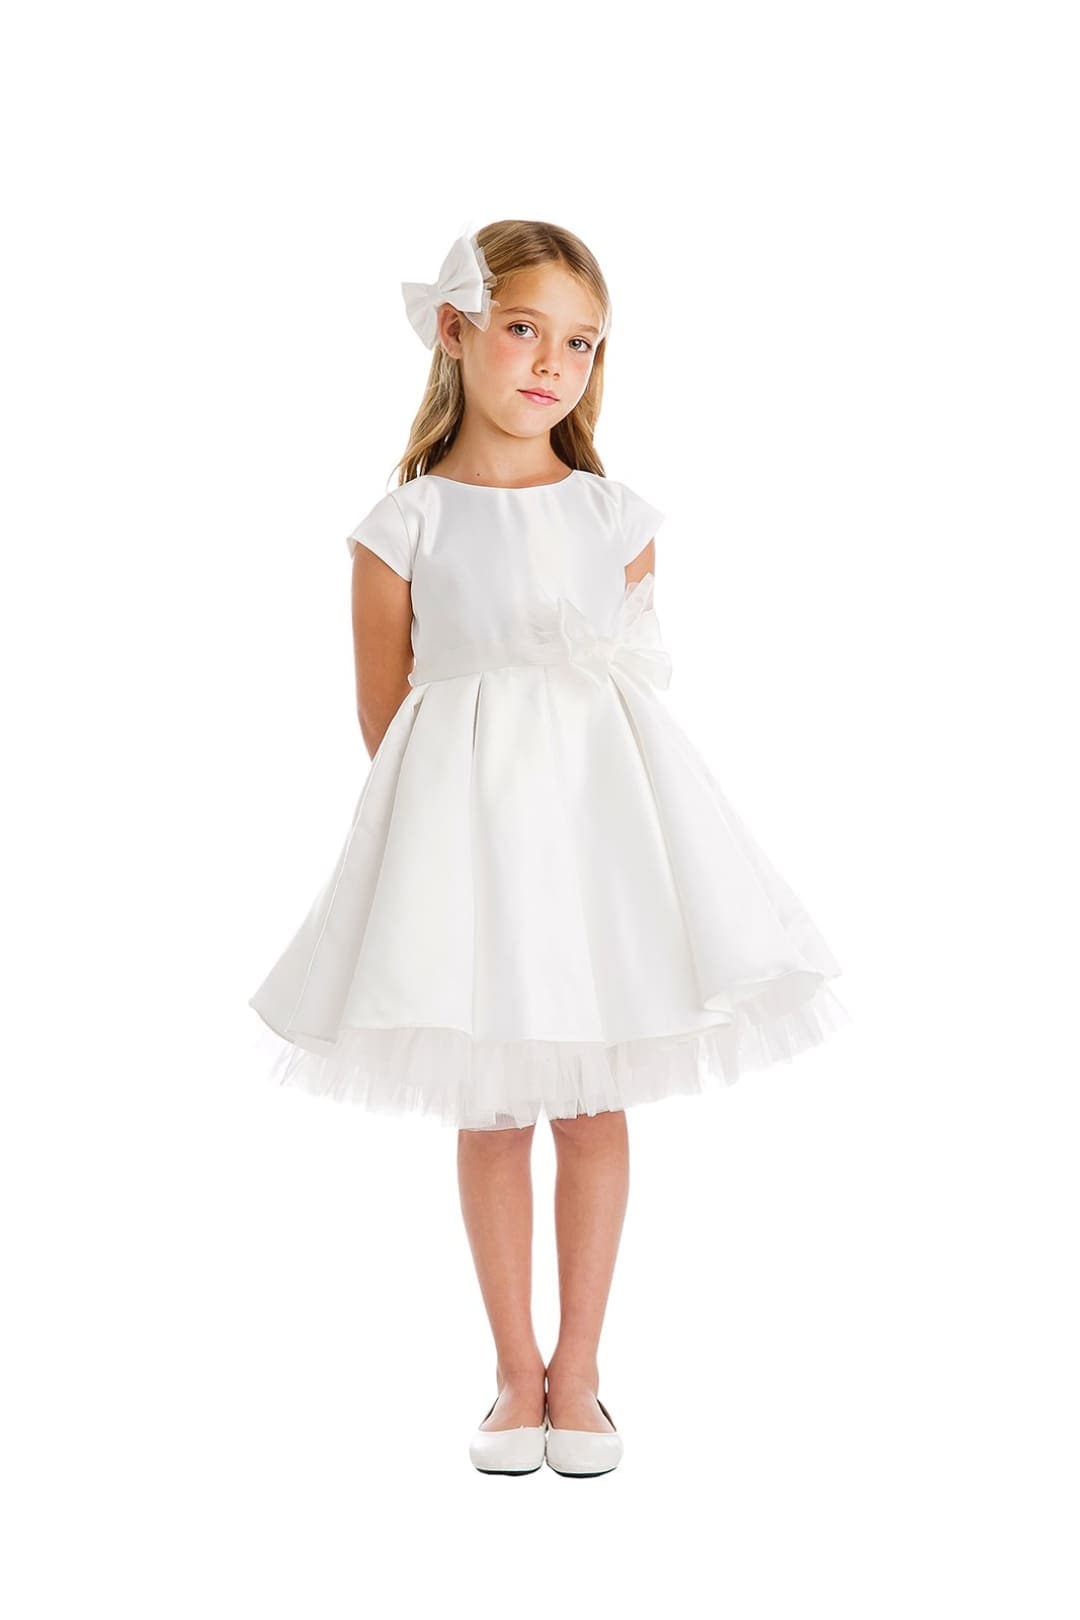 Little Girl Dress with Oversized Bow - LAK711 - WHITE / 2